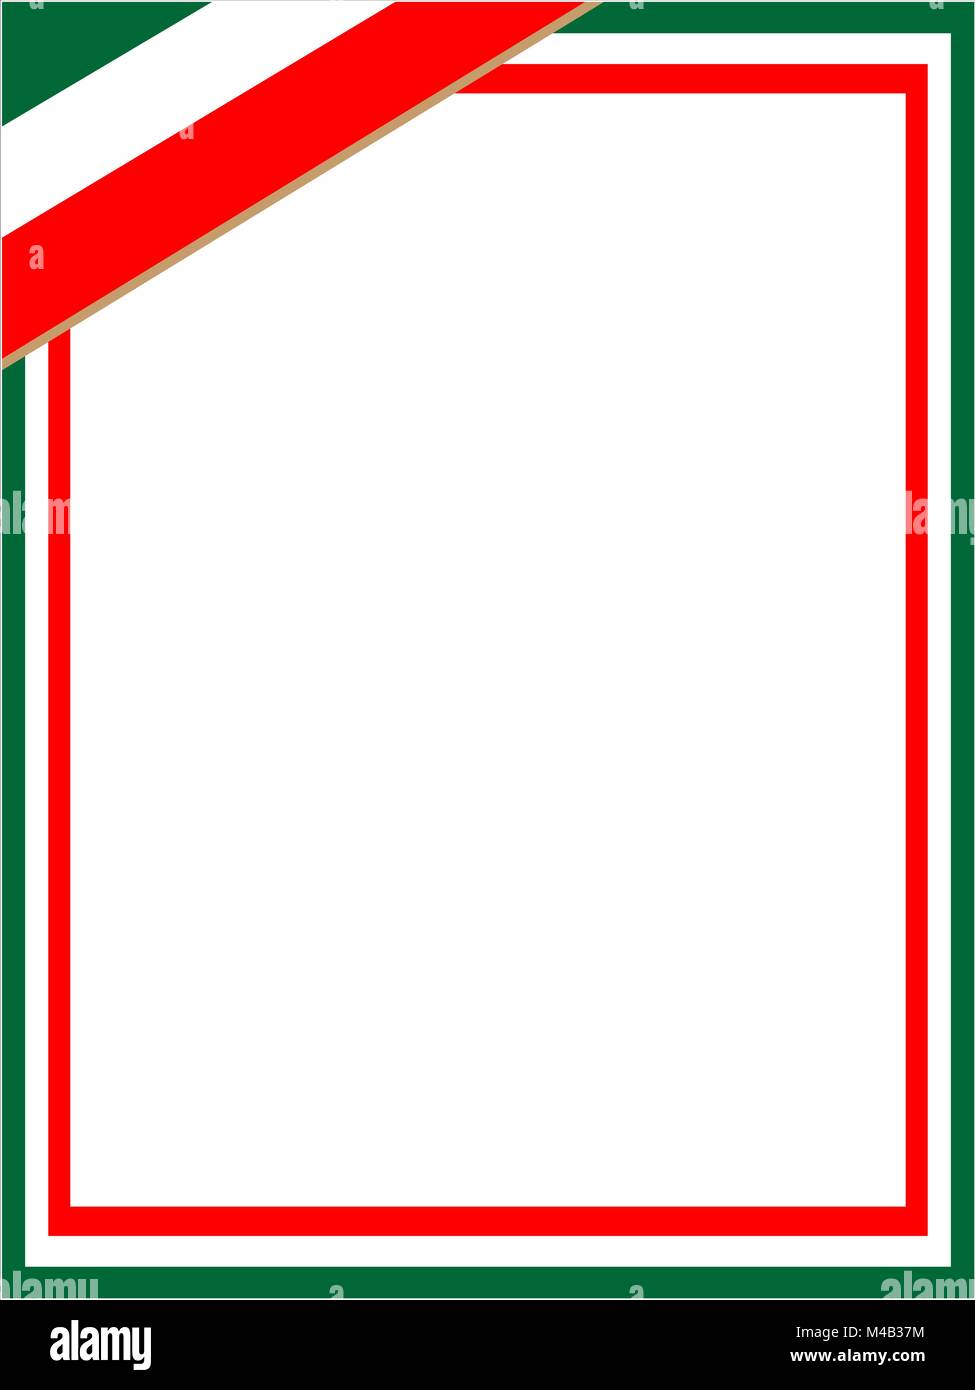 Italian green white red flag symbols patriotic frame Stock Vector